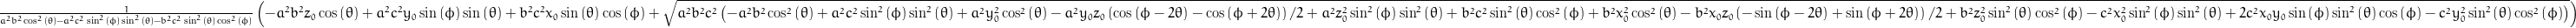 \frac{1}{a^{2} b^{2} \cos^{2}{\left (\theta \right )} - a^{2} c^{2} \sin^{2}{\left (\phi \right )} \sin^{2}{\left (\theta \right )} - b^{2} c^{2} \sin^{2}{\left (\theta \right )} \cos^{2}{\left (\phi \right )}} \left(- a^{2} b^{2} z_{0} \cos{\left (\theta \right )} + a^{2} c^{2} y_{0} \sin{\left (\phi \right )} \sin{\left (\theta \right )} + b^{2} c^{2} x_{0} \sin{\left (\theta \right )} \cos{\left (\phi \right )} + \sqrt{a^{2} b^{2} c^{2} \left(- a^{2} b^{2} \cos^{2}{\left (\theta \right )} + a^{2} c^{2} \sin^{2}{\left (\phi \right )} \sin^{2}{\left (\theta \right )} + a^{2} y_{0}^{2} \cos^{2}{\left (\theta \right )} - \frac{y_{0} z_{0}}{2} a^{2} \left(\cos{\left (\phi - 2 \theta \right )} - \cos{\left (\phi + 2 \theta \right )}\right) + a^{2} z_{0}^{2} \sin^{2}{\left (\phi \right )} \sin^{2}{\left (\theta \right )} + b^{2} c^{2} \sin^{2}{\left (\theta \right )} \cos^{2}{\left (\phi \right )} + b^{2} x_{0}^{2} \cos^{2}{\left (\theta \right )} - \frac{x_{0} z_{0}}{2} b^{2} \left(- \sin{\left (\phi - 2 \theta \right )} + \sin{\left (\phi + 2 \theta \right )}\right) + b^{2} z_{0}^{2} \sin^{2}{\left (\theta \right )} \cos^{2}{\left (\phi \right )} - c^{2} x_{0}^{2} \sin^{2}{\left (\phi \right )} \sin^{2}{\left (\theta \right )} + 2 c^{2} x_{0} y_{0} \sin{\left (\phi \right )} \sin^{2}{\left (\theta \right )} \cos{\left (\phi \right )} - c^{2} y_{0}^{2} \sin^{2}{\left (\theta \right )} \cos^{2}{\left (\phi \right )}\right)}\right)